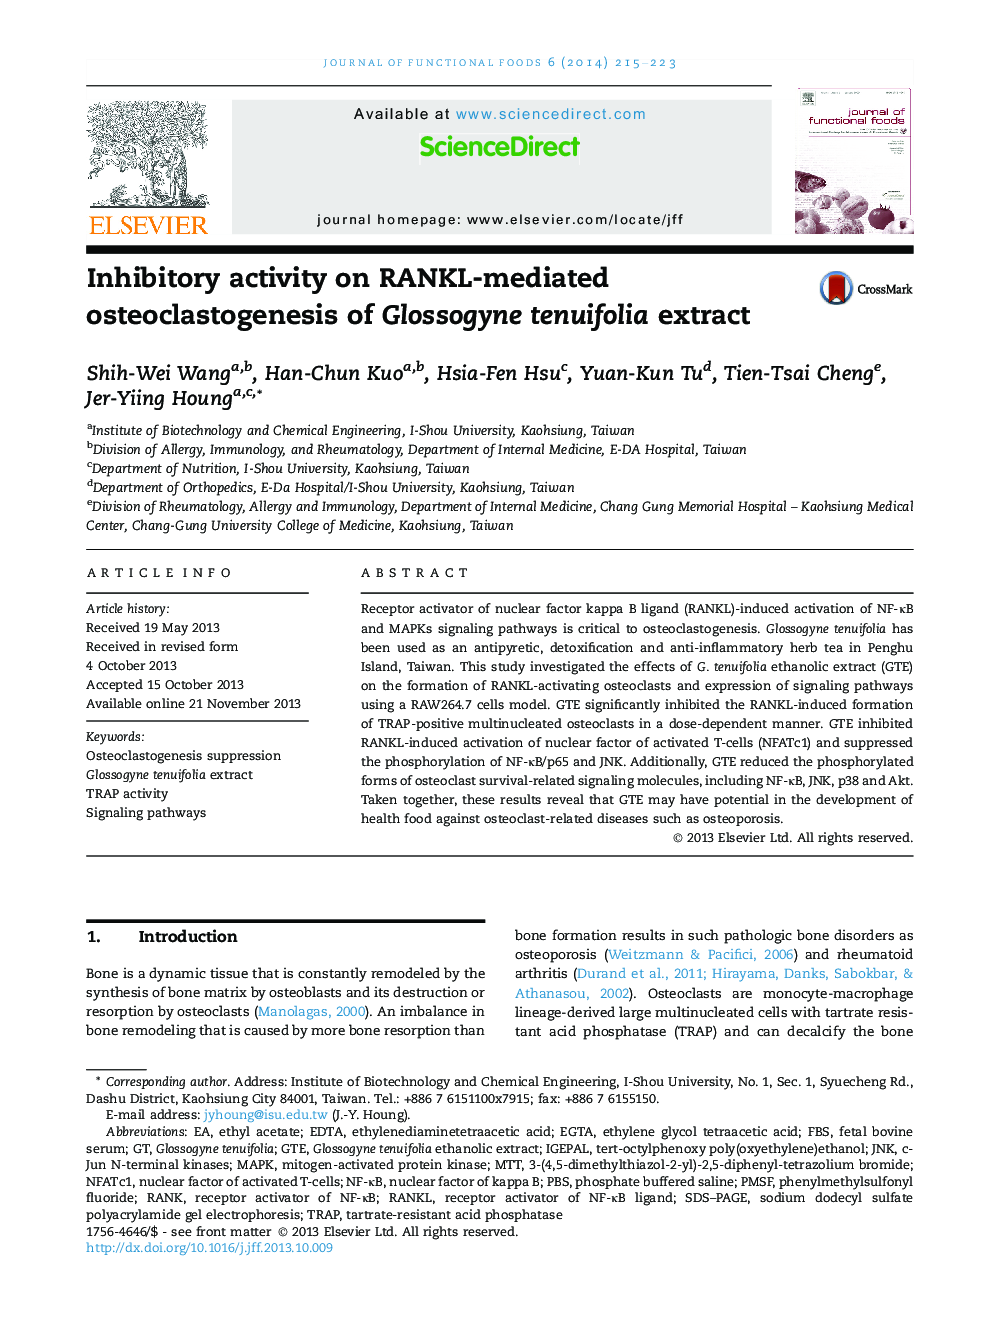 Inhibitory activity on RANKL-mediated osteoclastogenesis of Glossogyne tenuifolia extract